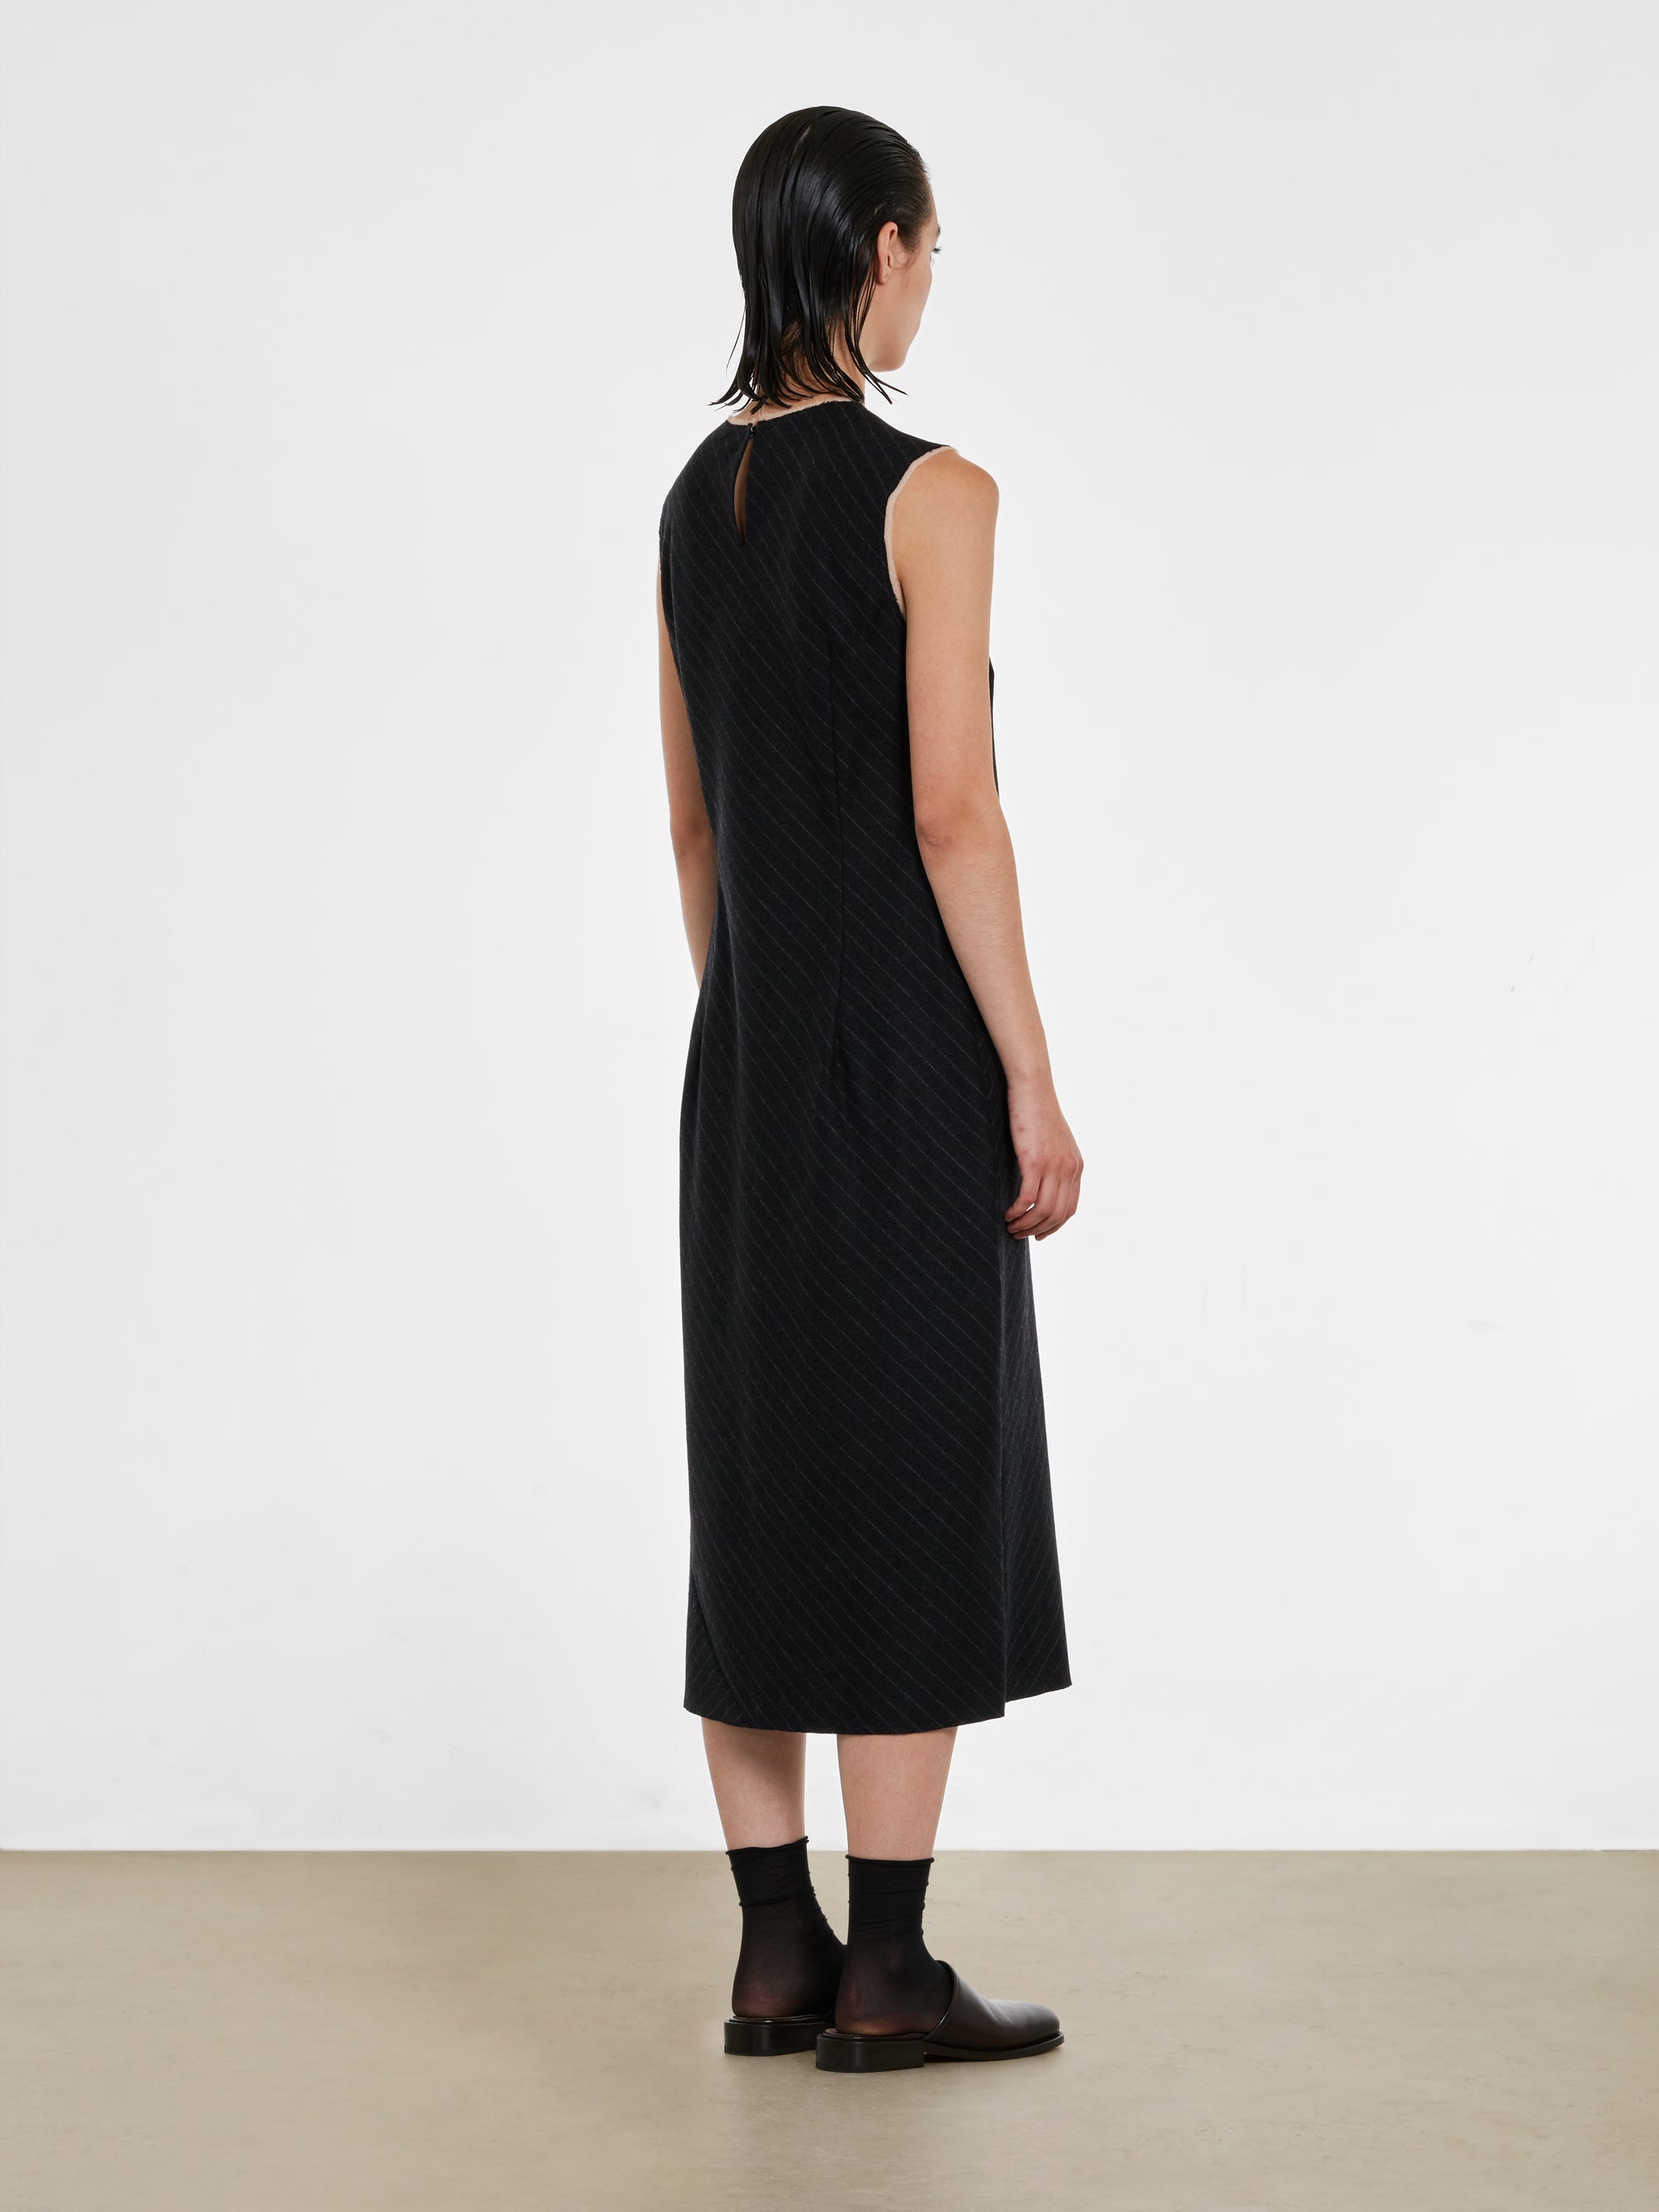 Dries Van Noten - Women’s Pinstripe Dress - (Anthracite) view 3